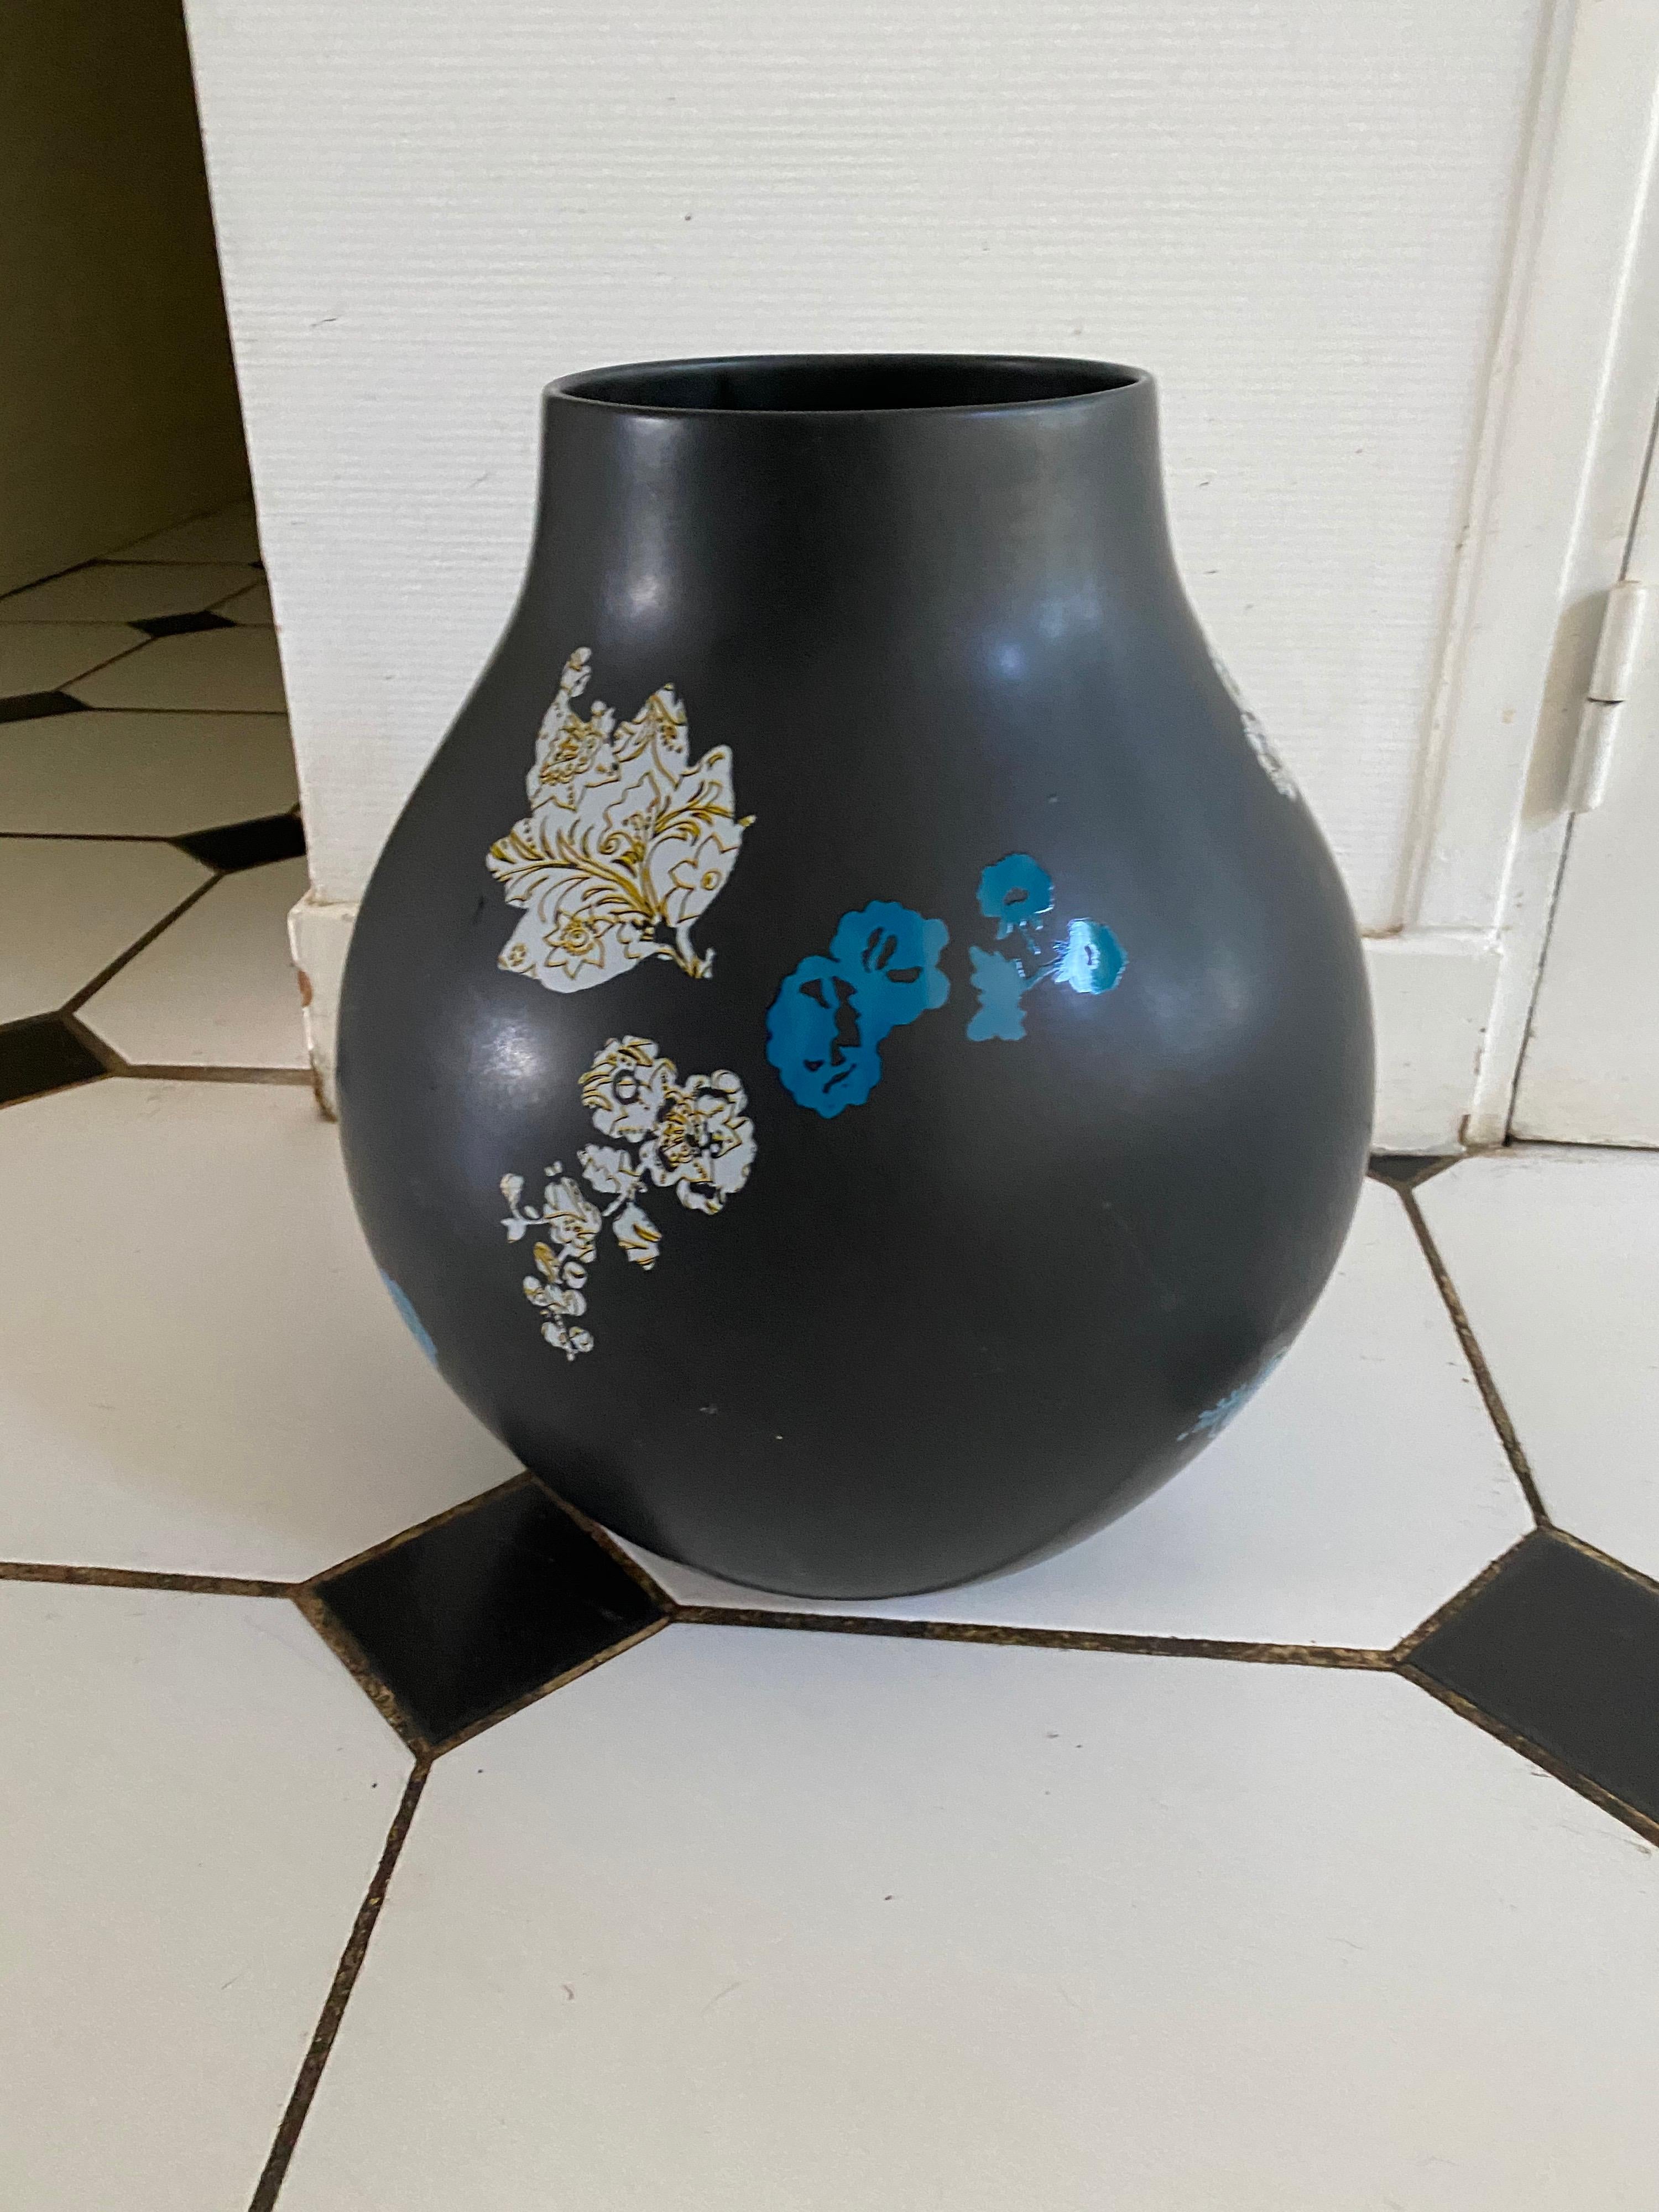 Gigantesque vase en céramique à décor de fleurs estampillé Ikea, circa 1990.